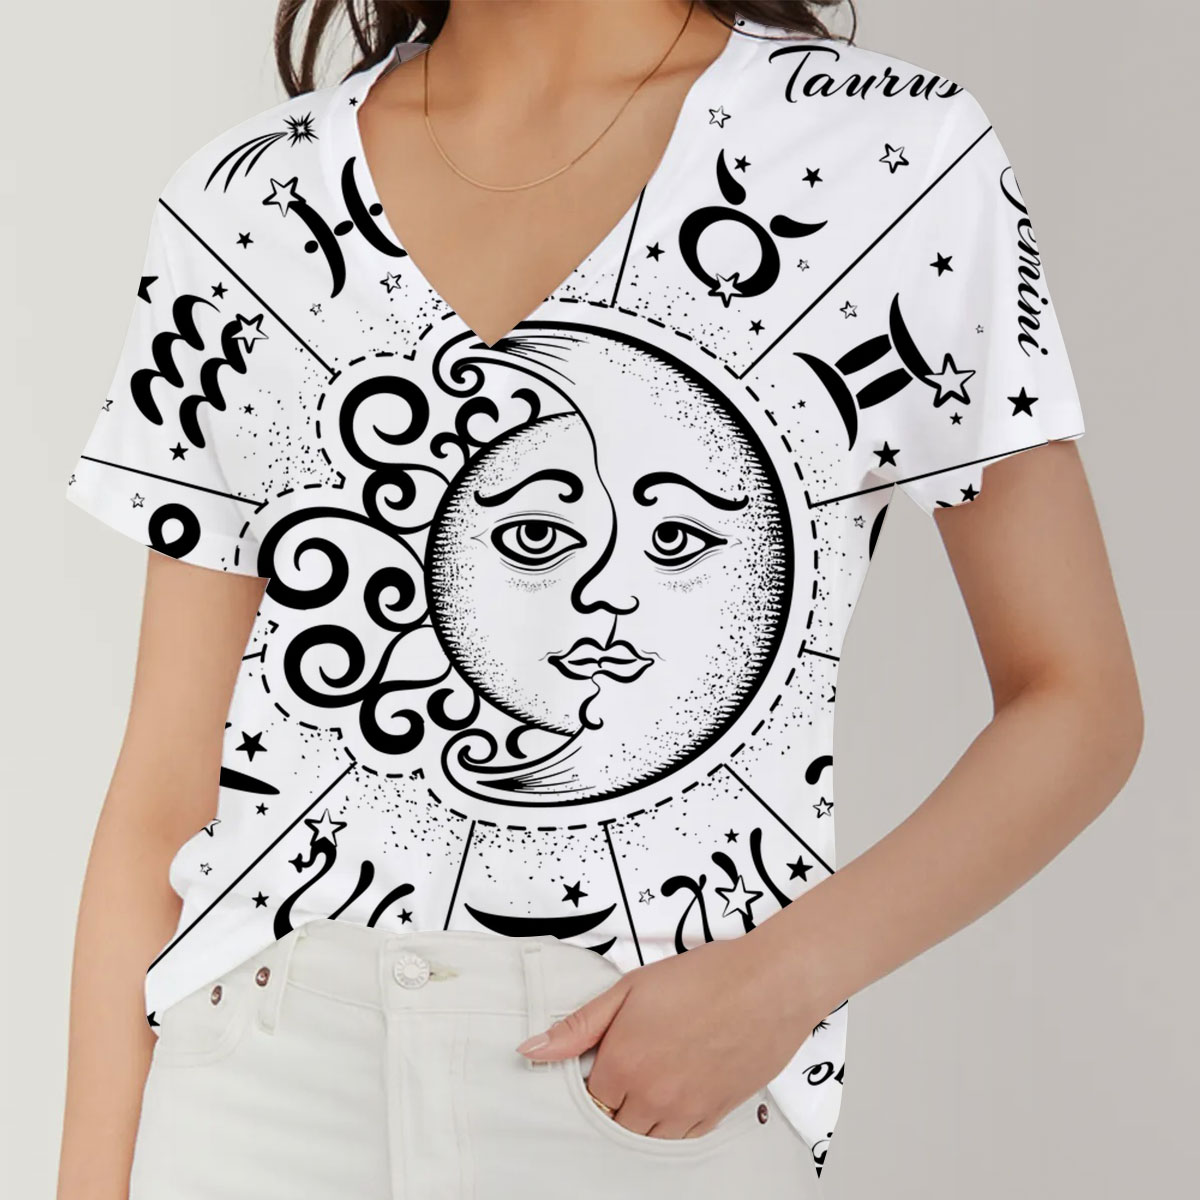 Zodiac Signs V-Neck Women's T-Shirt_1_2.1